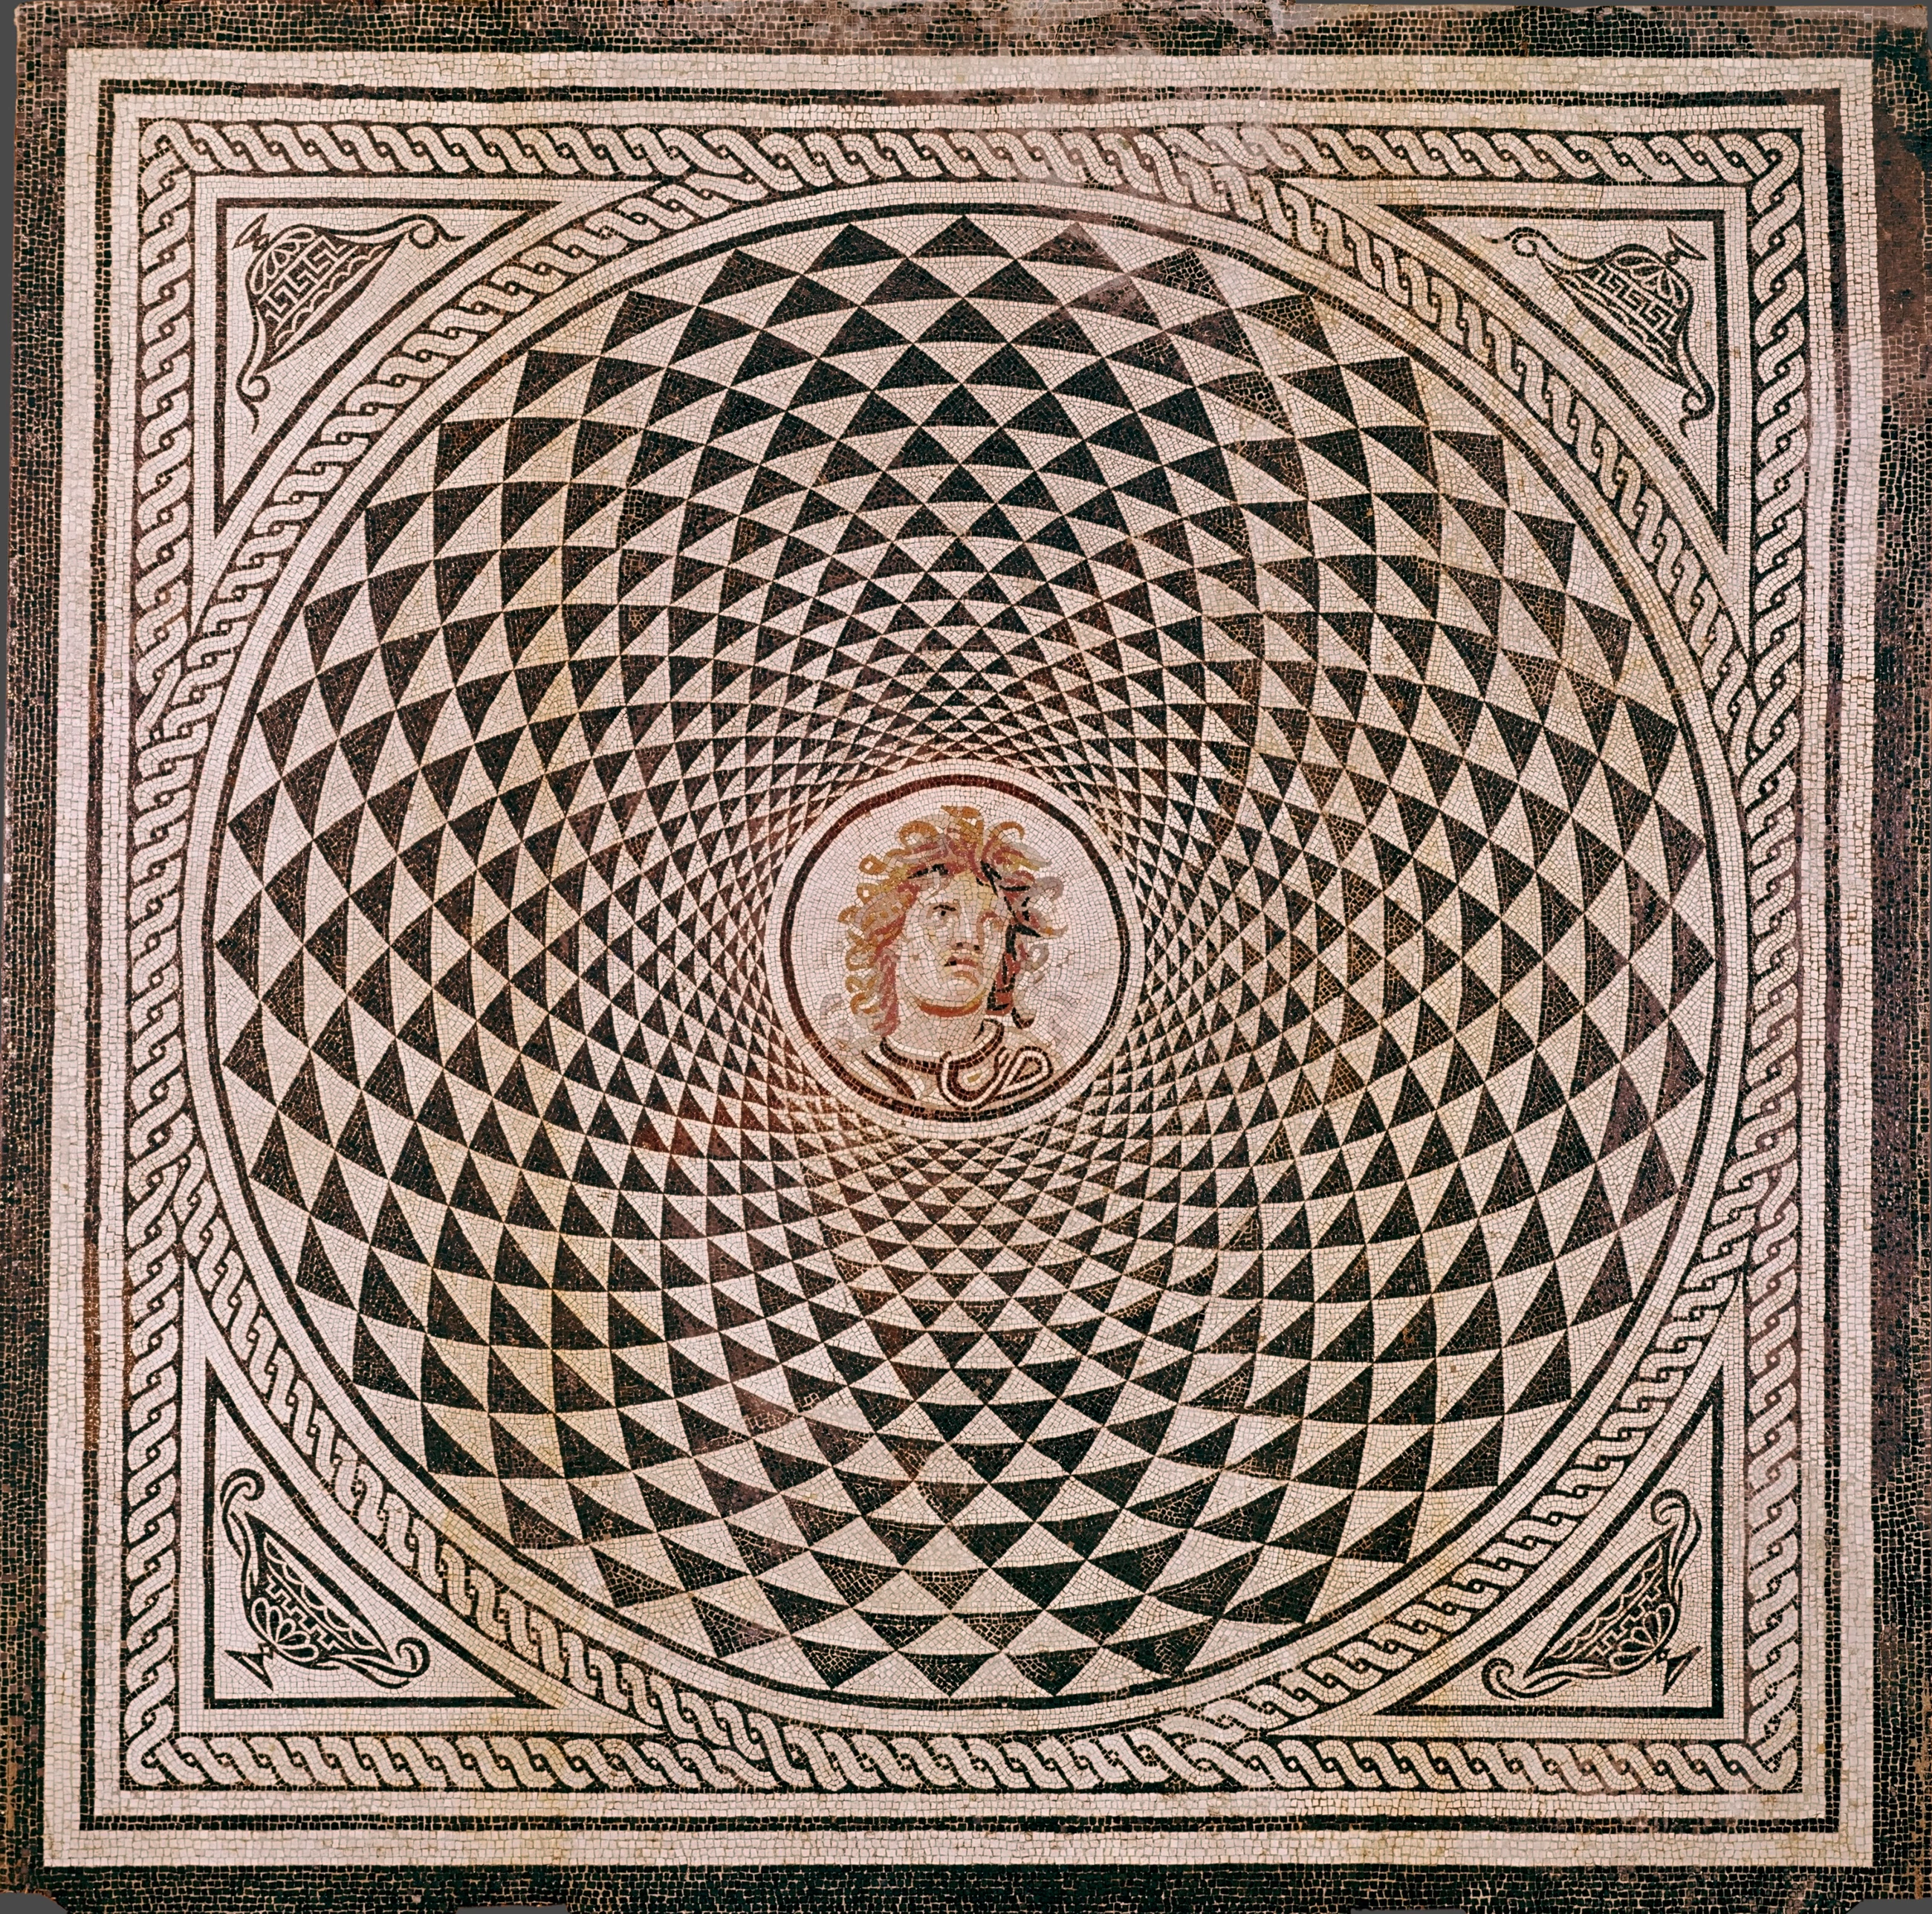 Mosaic Floor with Head of Medusa, Ancient Rome